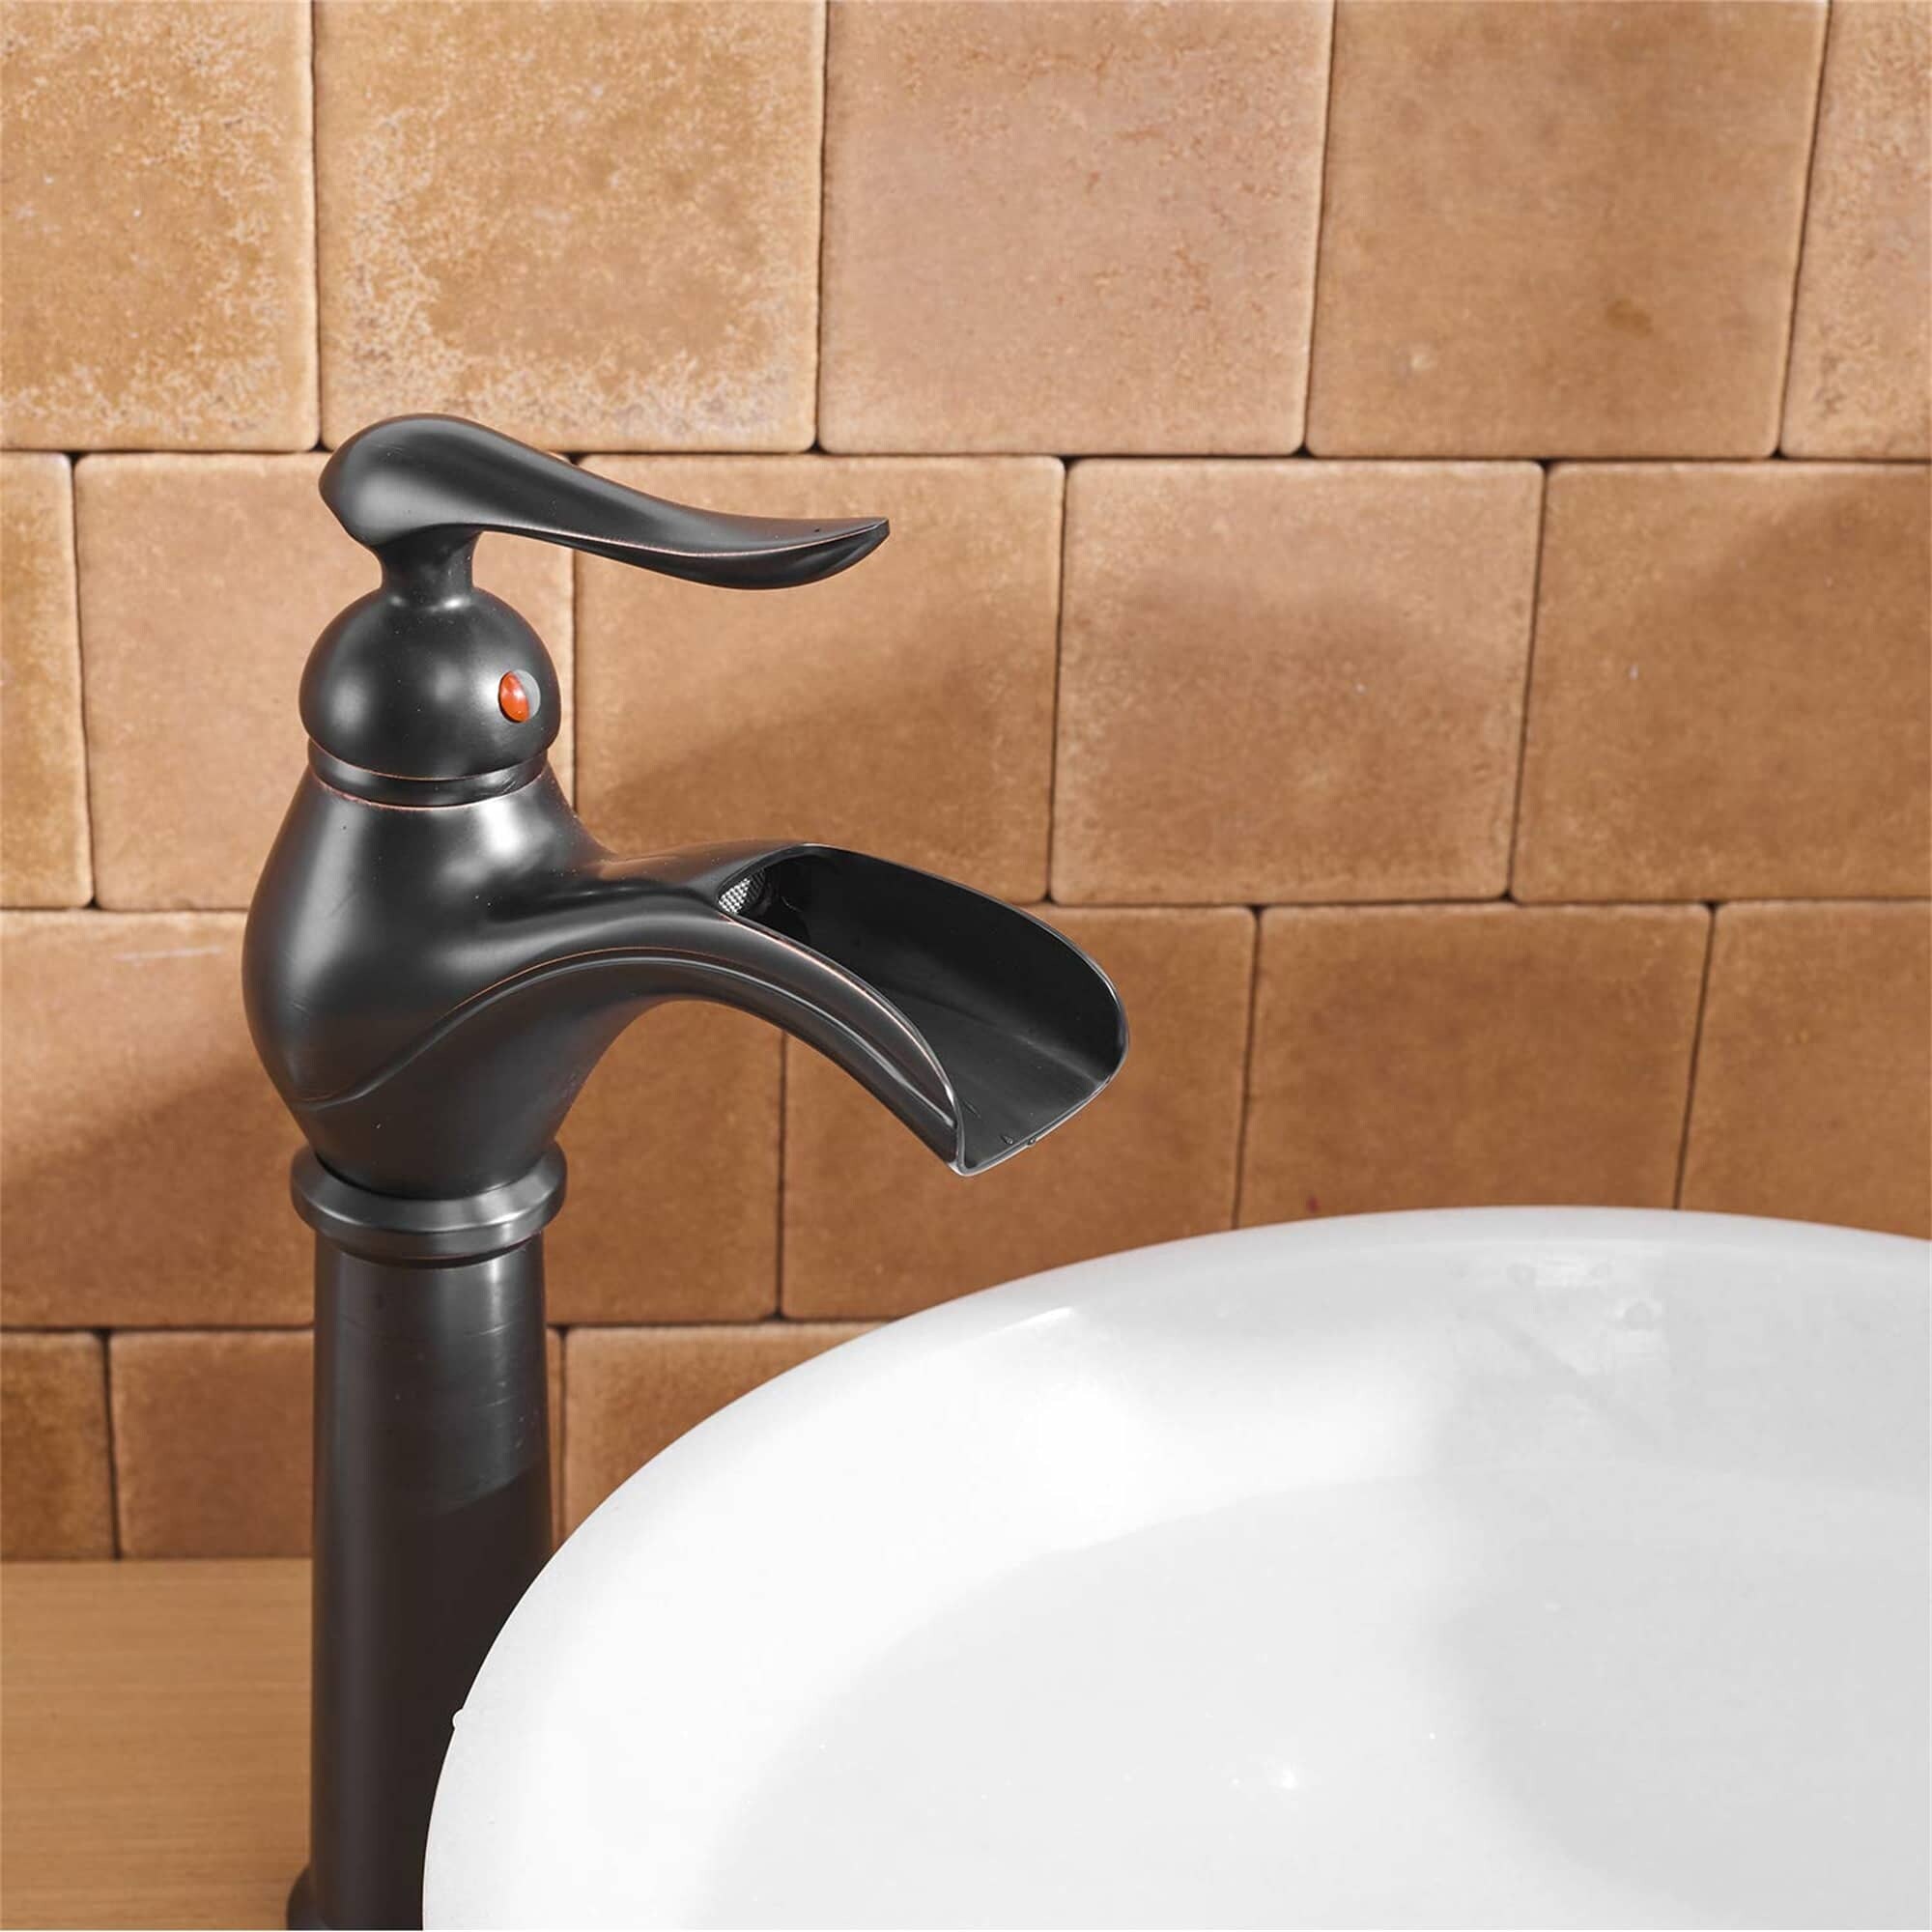 11" LED Bathroom Vessel Faucet Oil Rubbed Bronze Water Flow One Handle/Hole Taps 